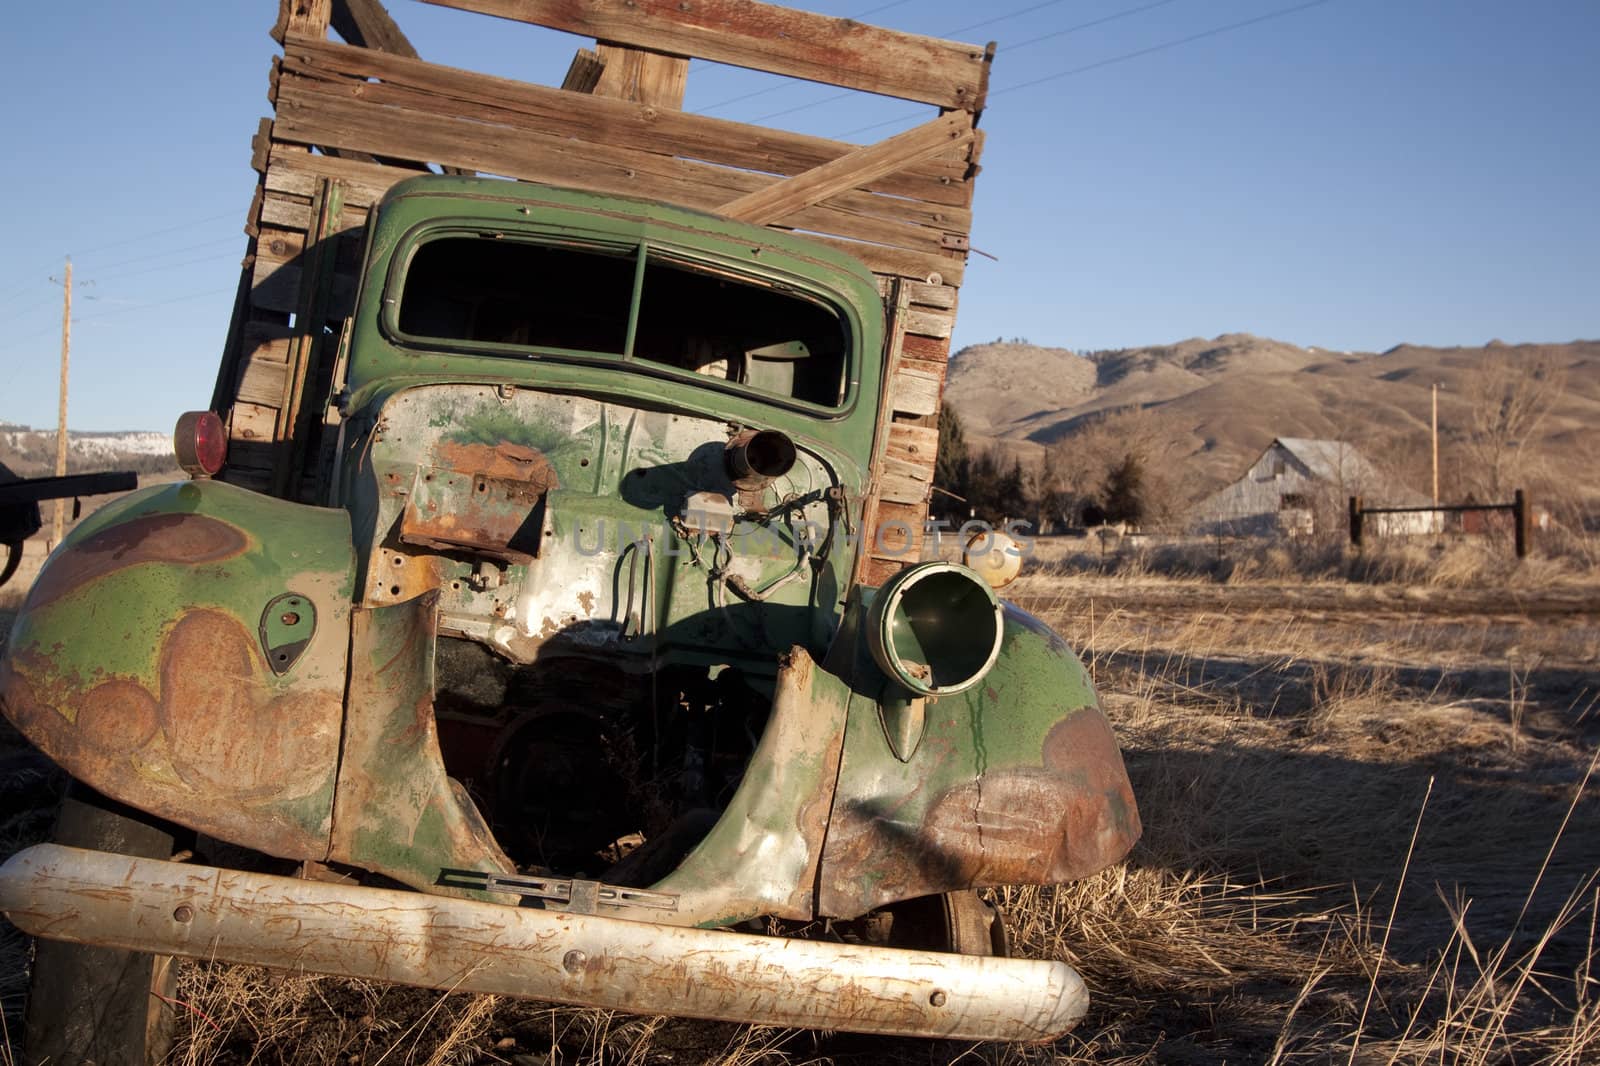 Old rusty truck in a field by jeremywhat